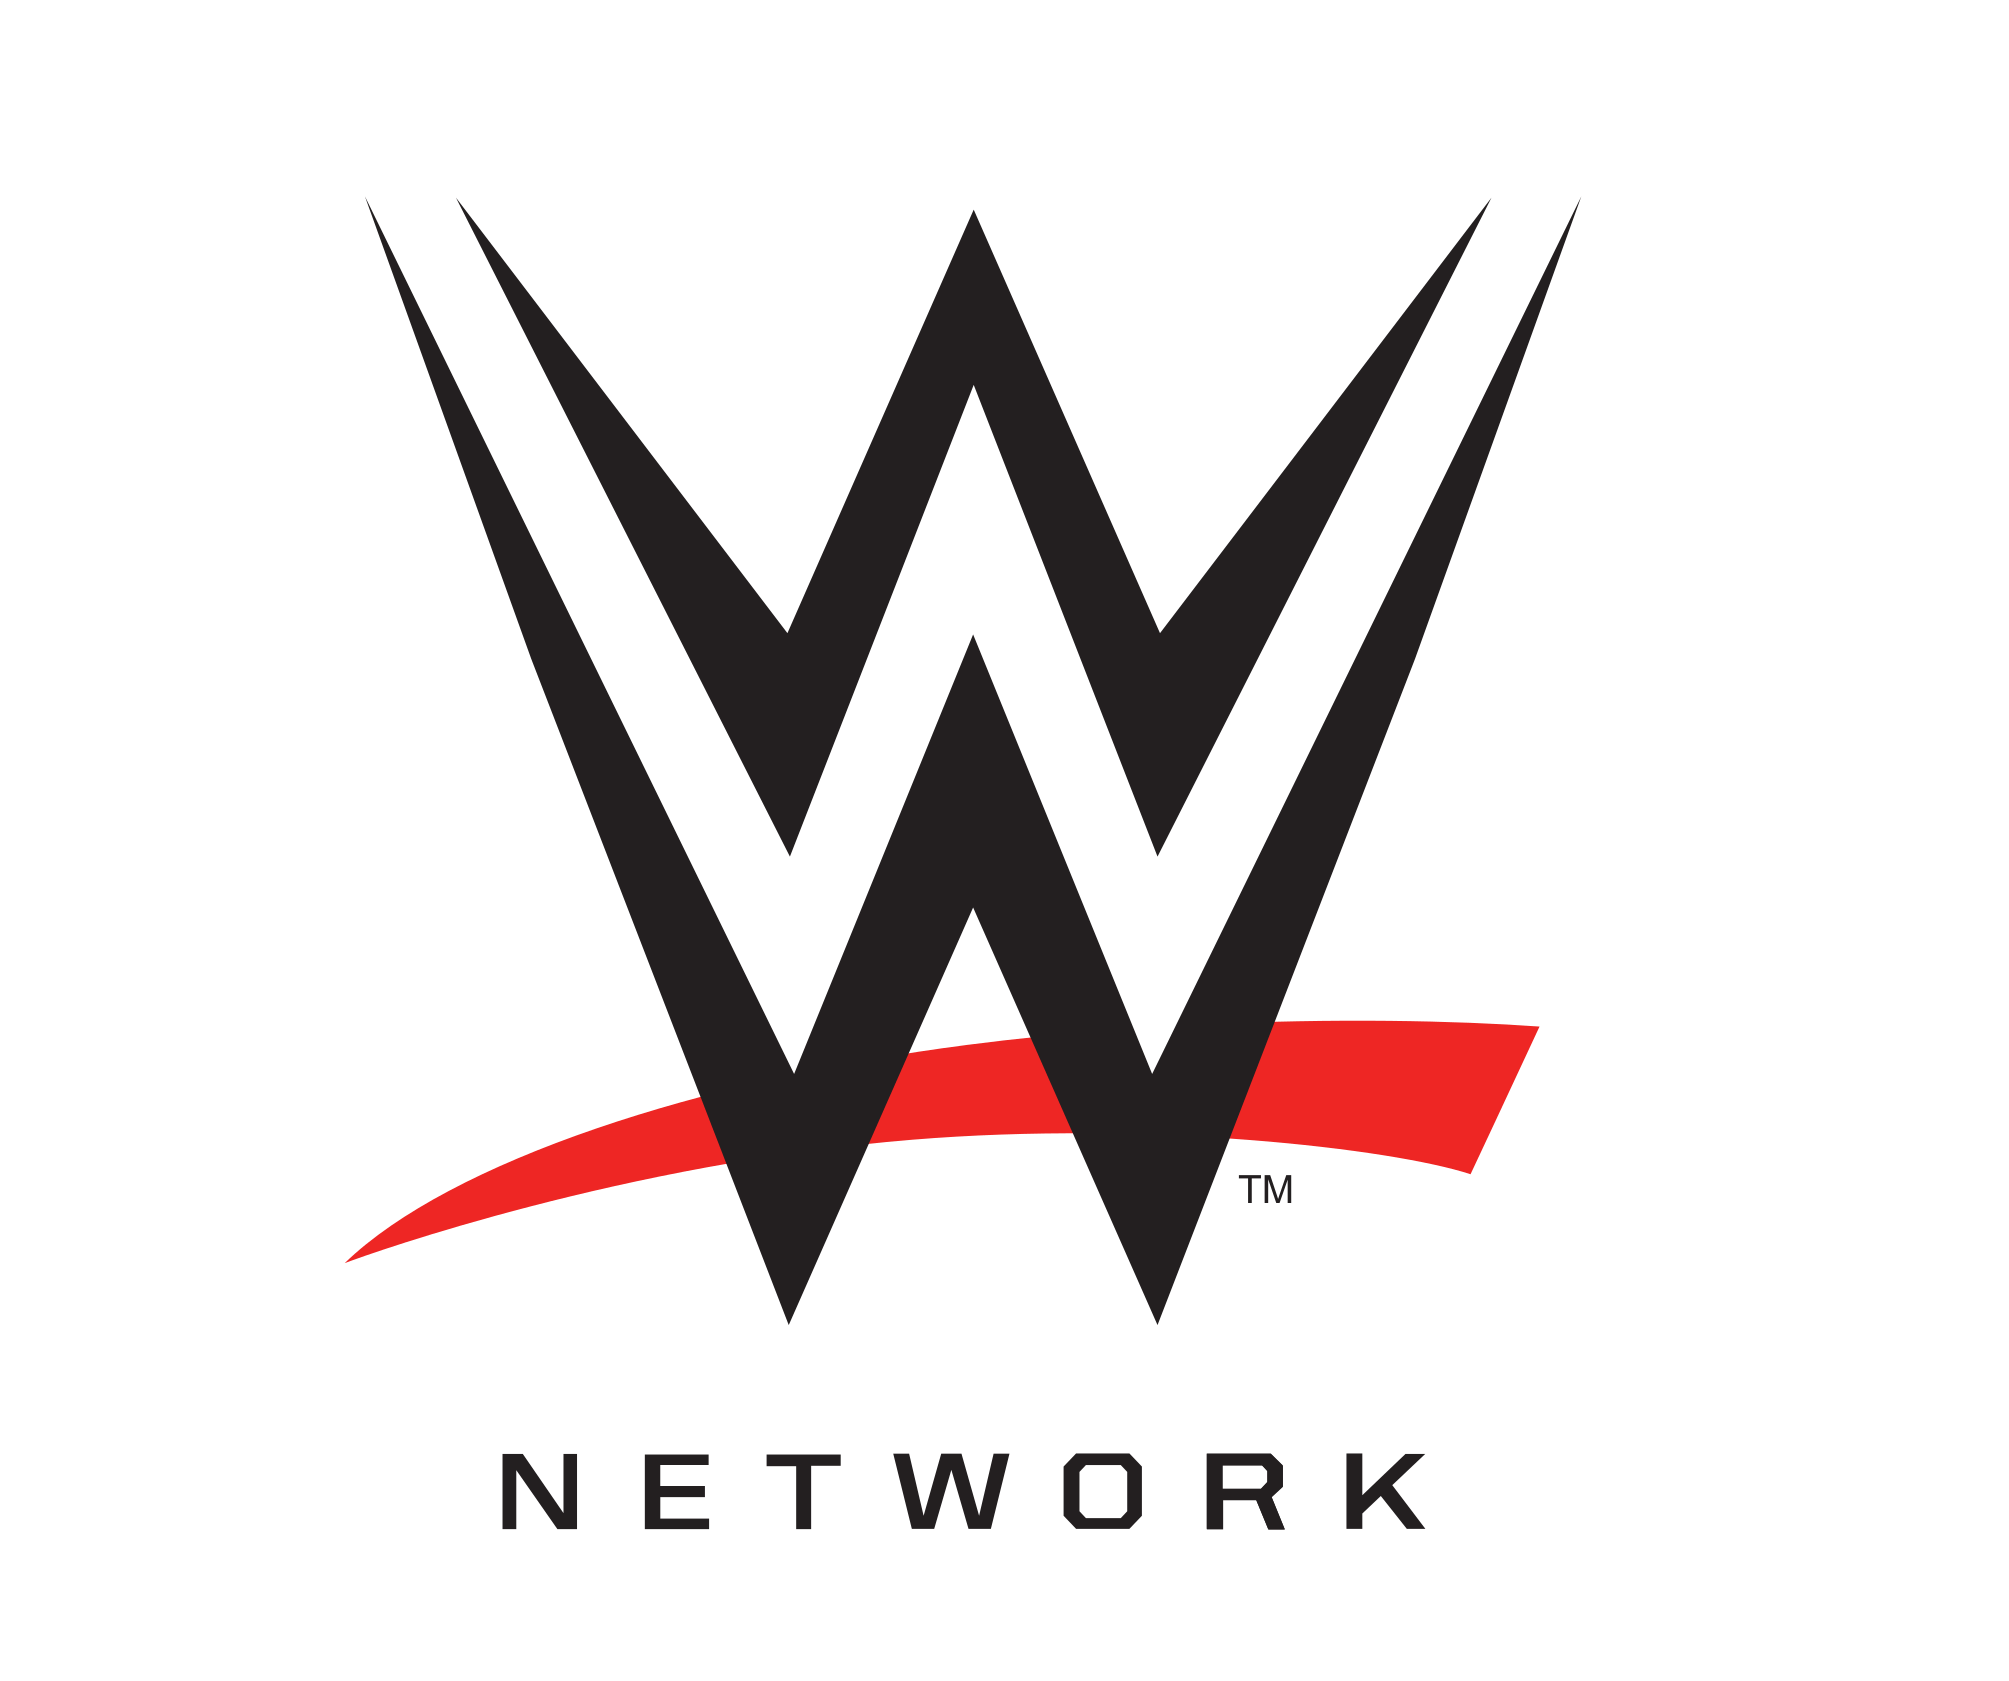 WWE NETWORK